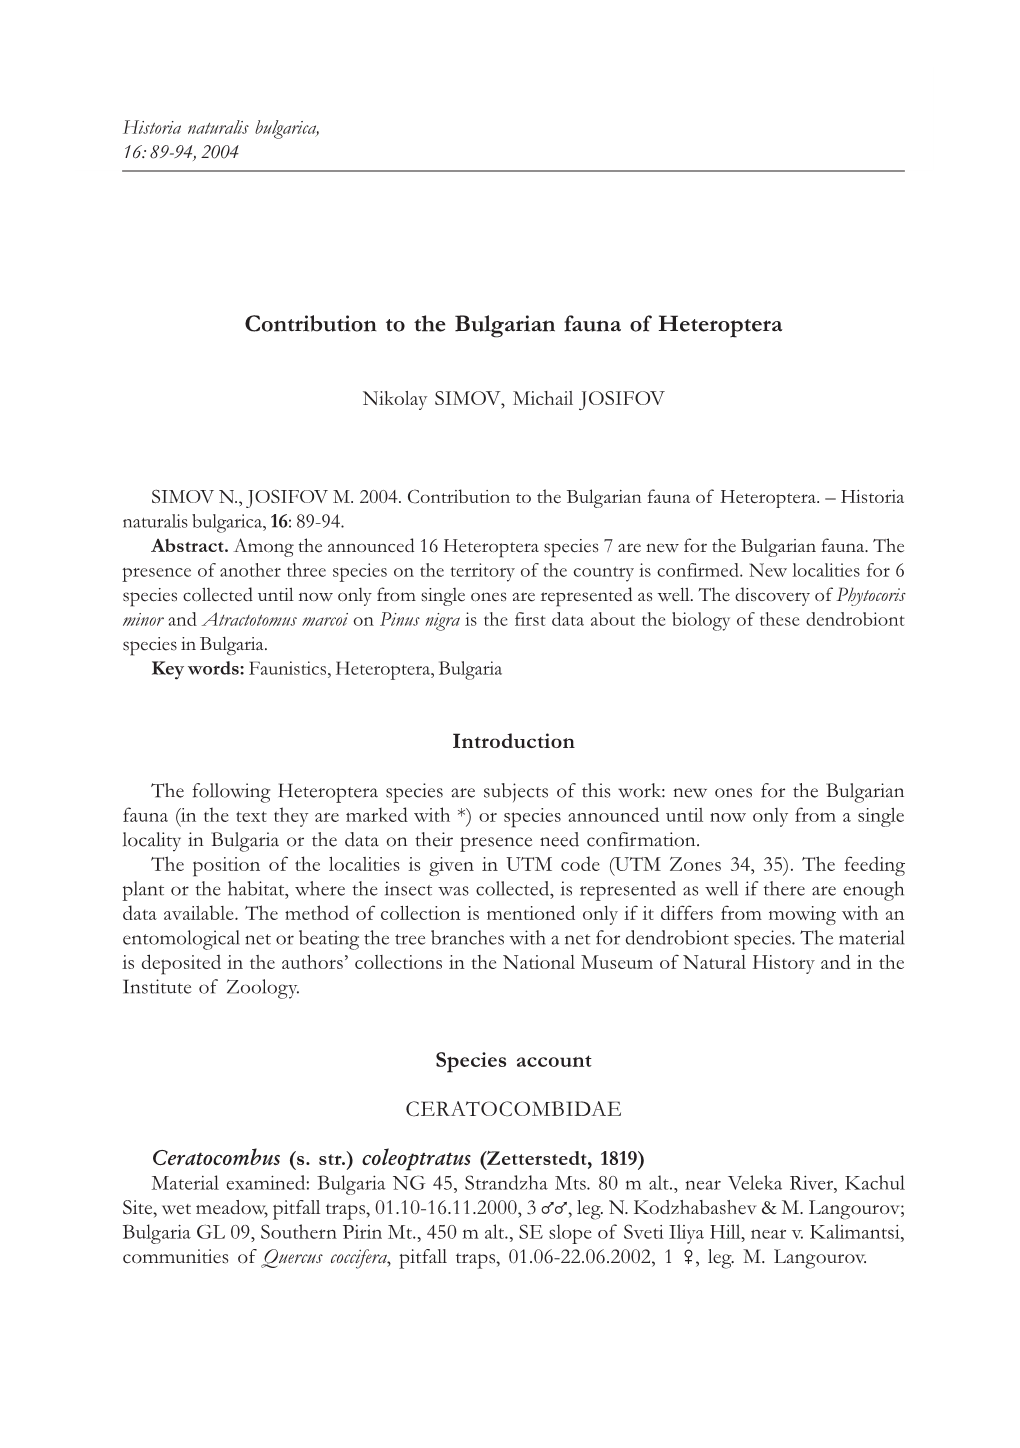 Contribution to the Bulgarian Fauna of Heteroptera 89 16: 89-94, 2004